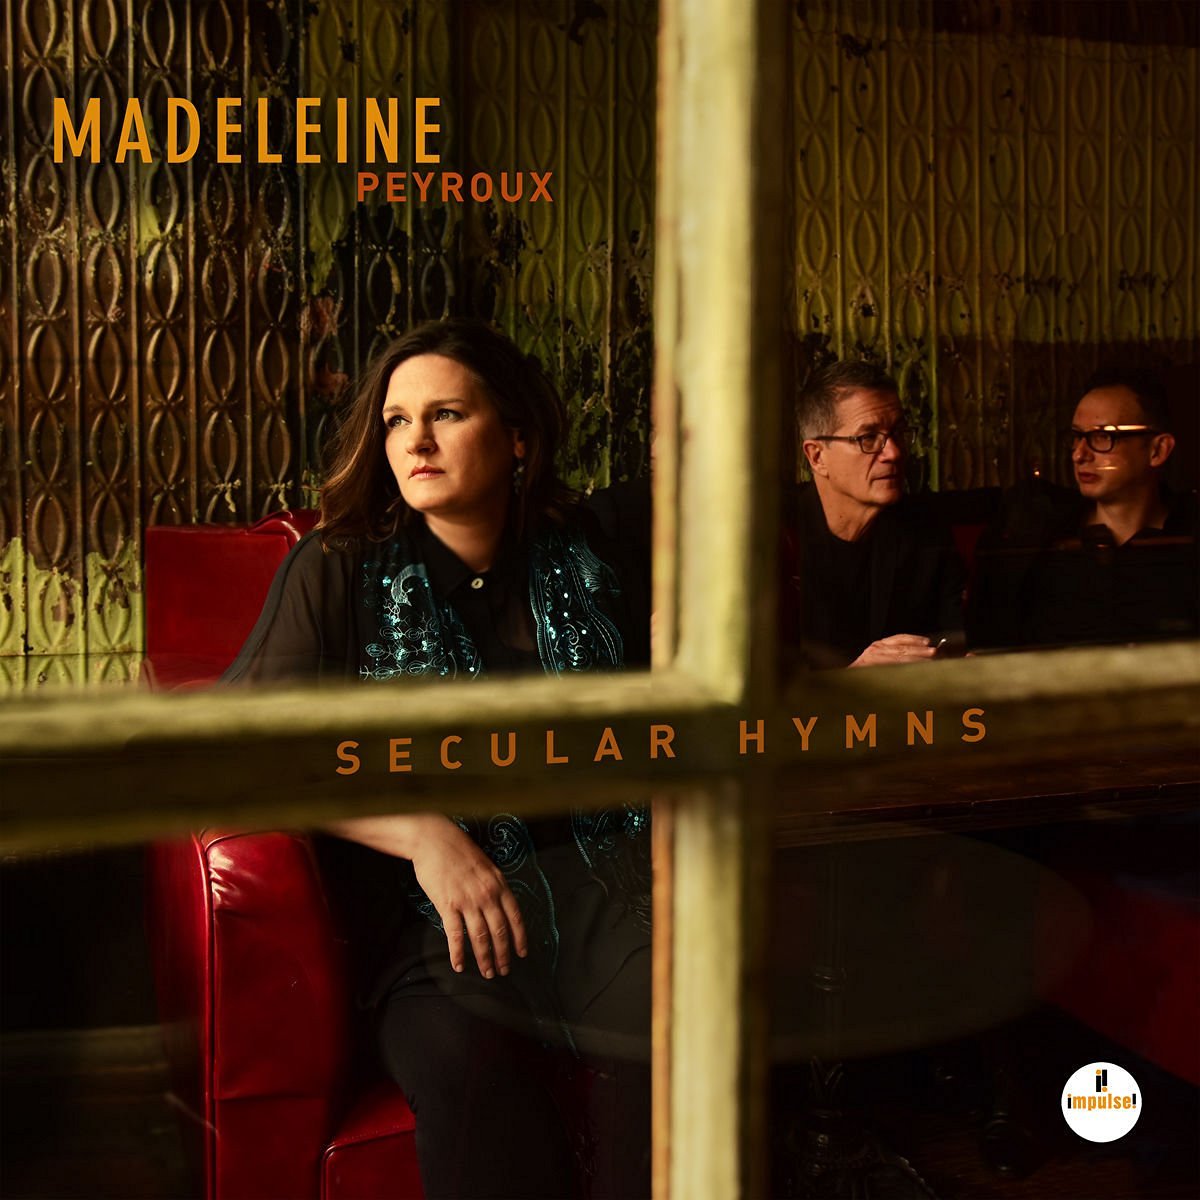 Madeleine Peyroux - Secular Hymns (2016) [HDTracks FLAC 24bit/96kHz]